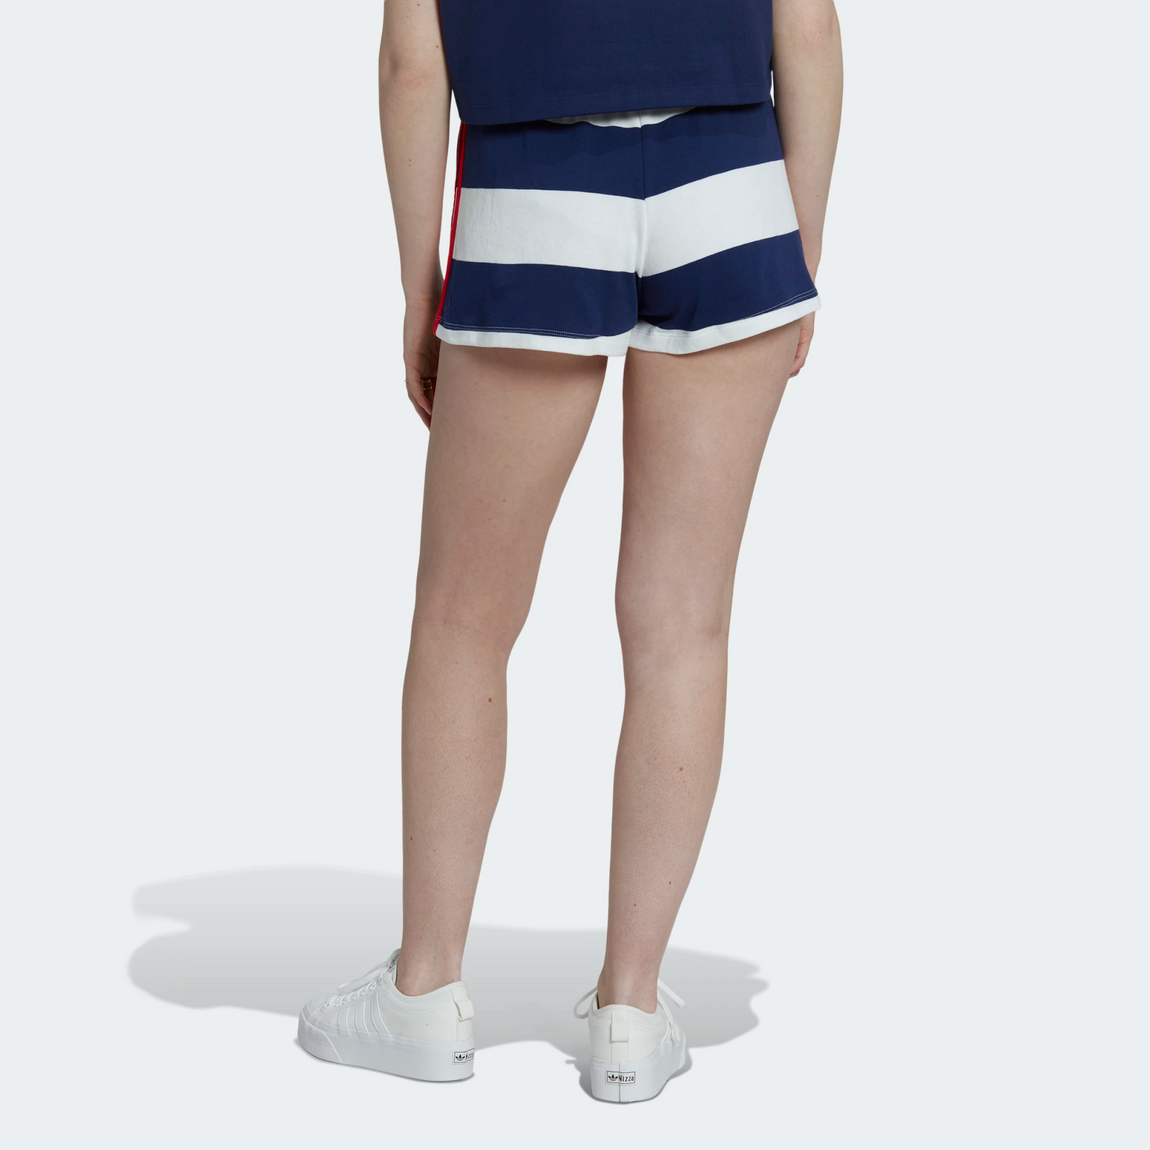 Adidas Women's Mid Waist Striped Shorts (Night Sky/White) - Adidas Women's Mid Waist Striped Shorts (Night Sky/White) - 